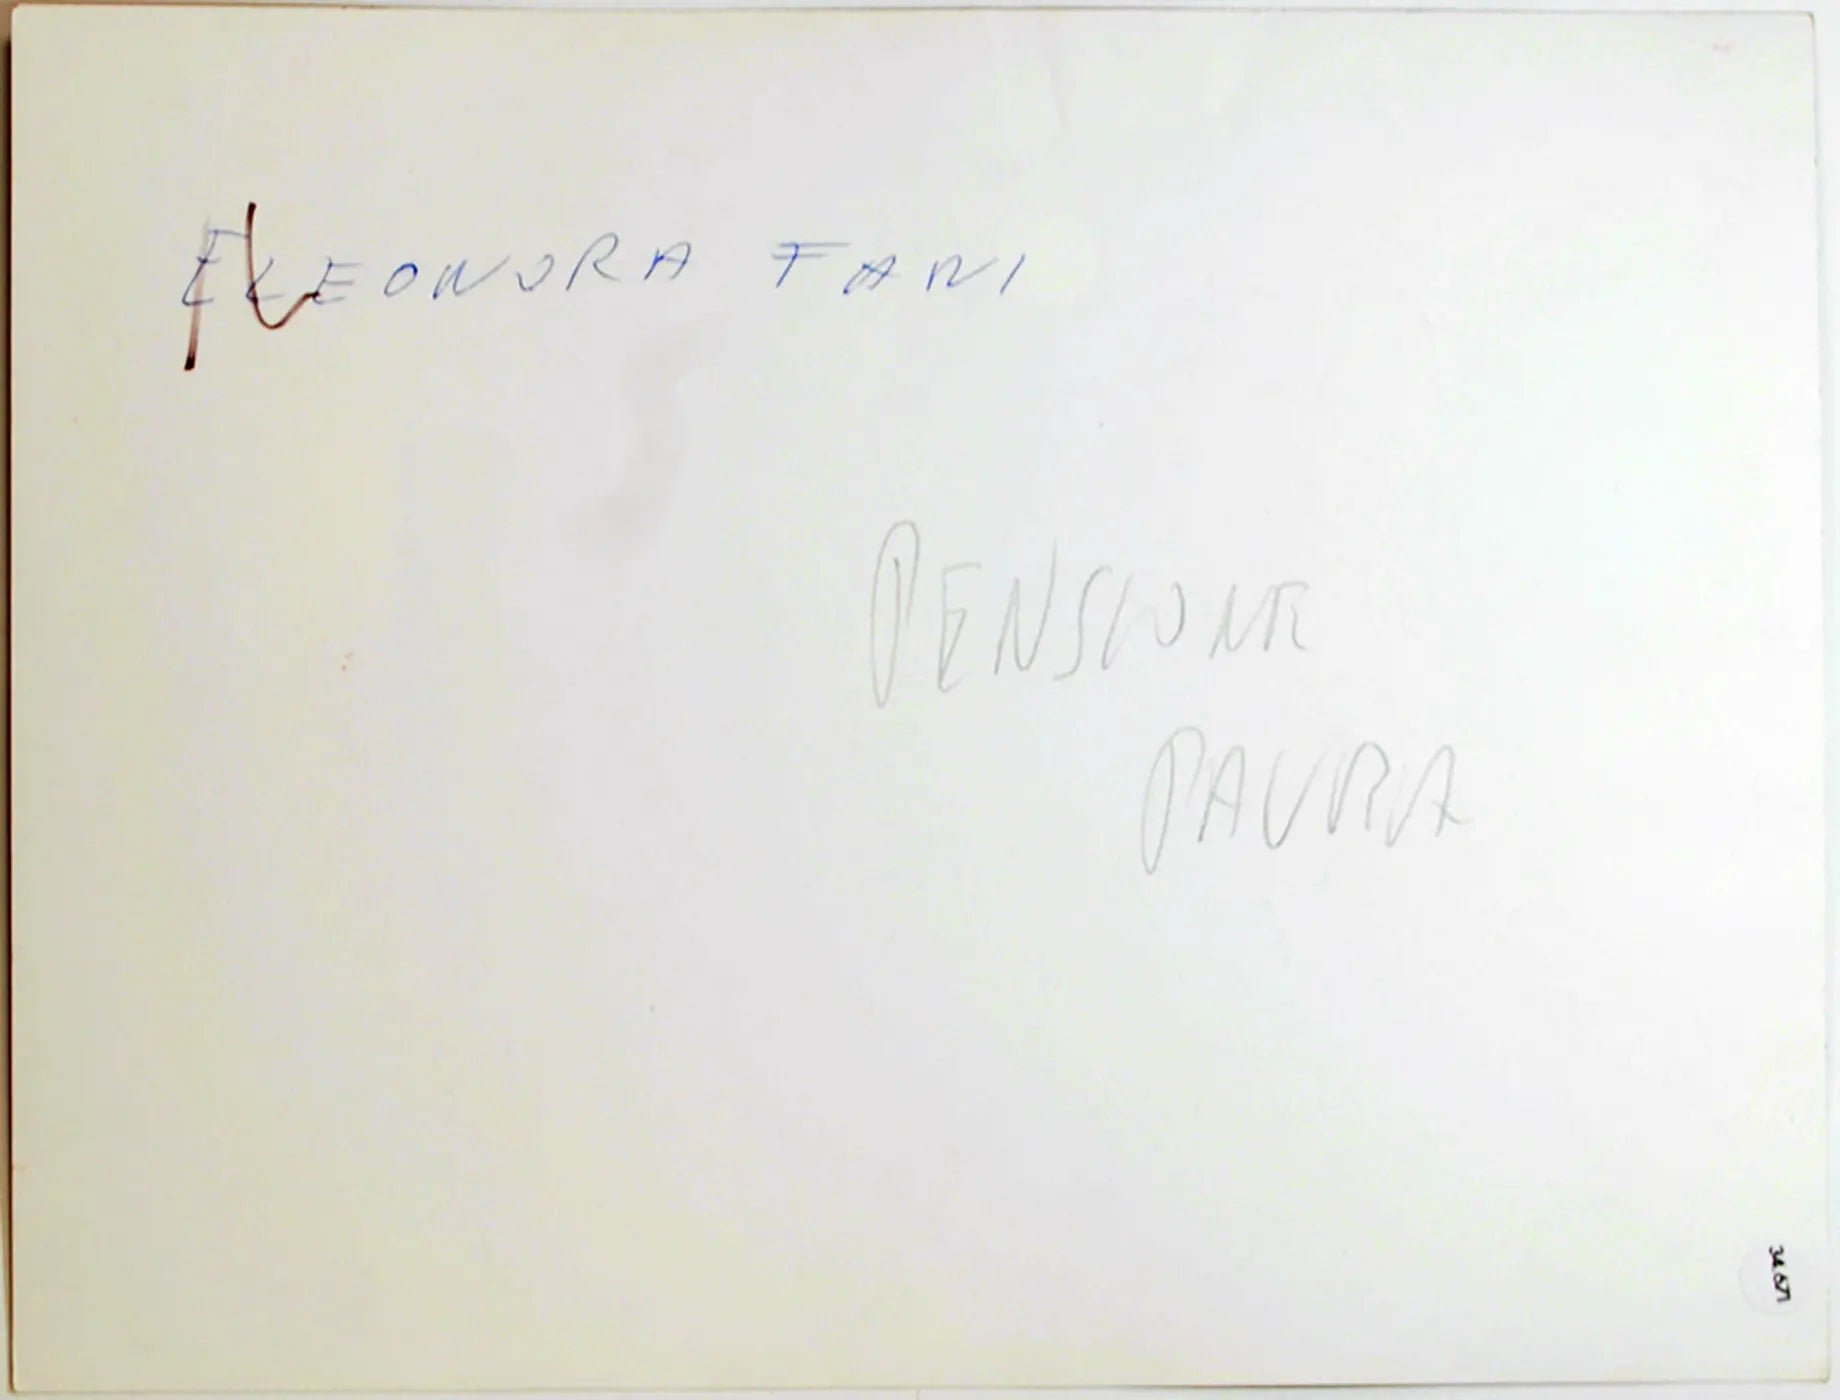 Film Pensione Paura 1978 Ft 34671 - Stampa 24x18 cm - Farabola Stampa ai sali d'argento